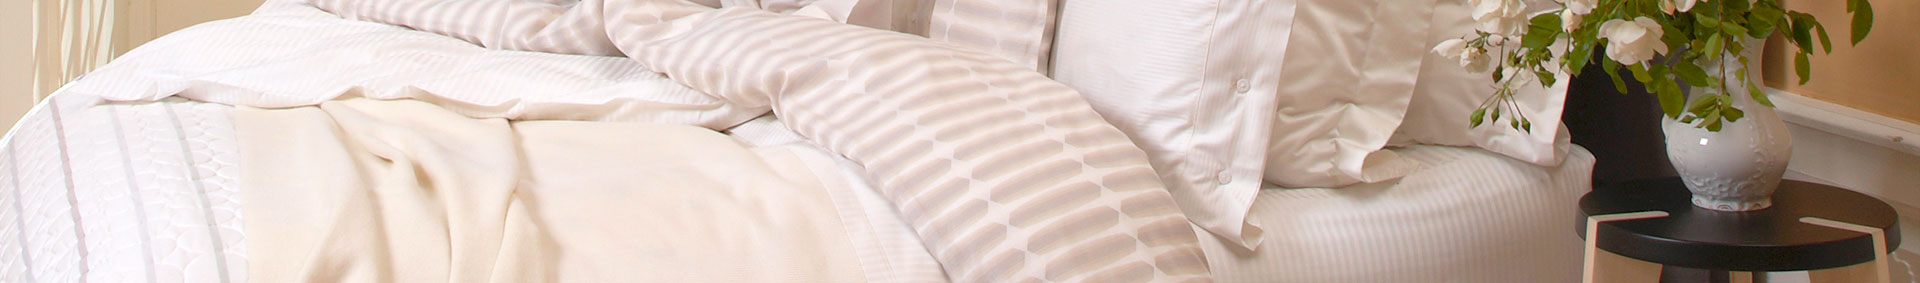 Private Label Bedding - Foam Mattresses - Memory Foam - Gel Foam - Pillows - Sheet Sets - Memory Foam Mattress Toppers - Hybrid Coil and Foam Mattresses - Linens - Danican Private Label Bedding Manufacturer